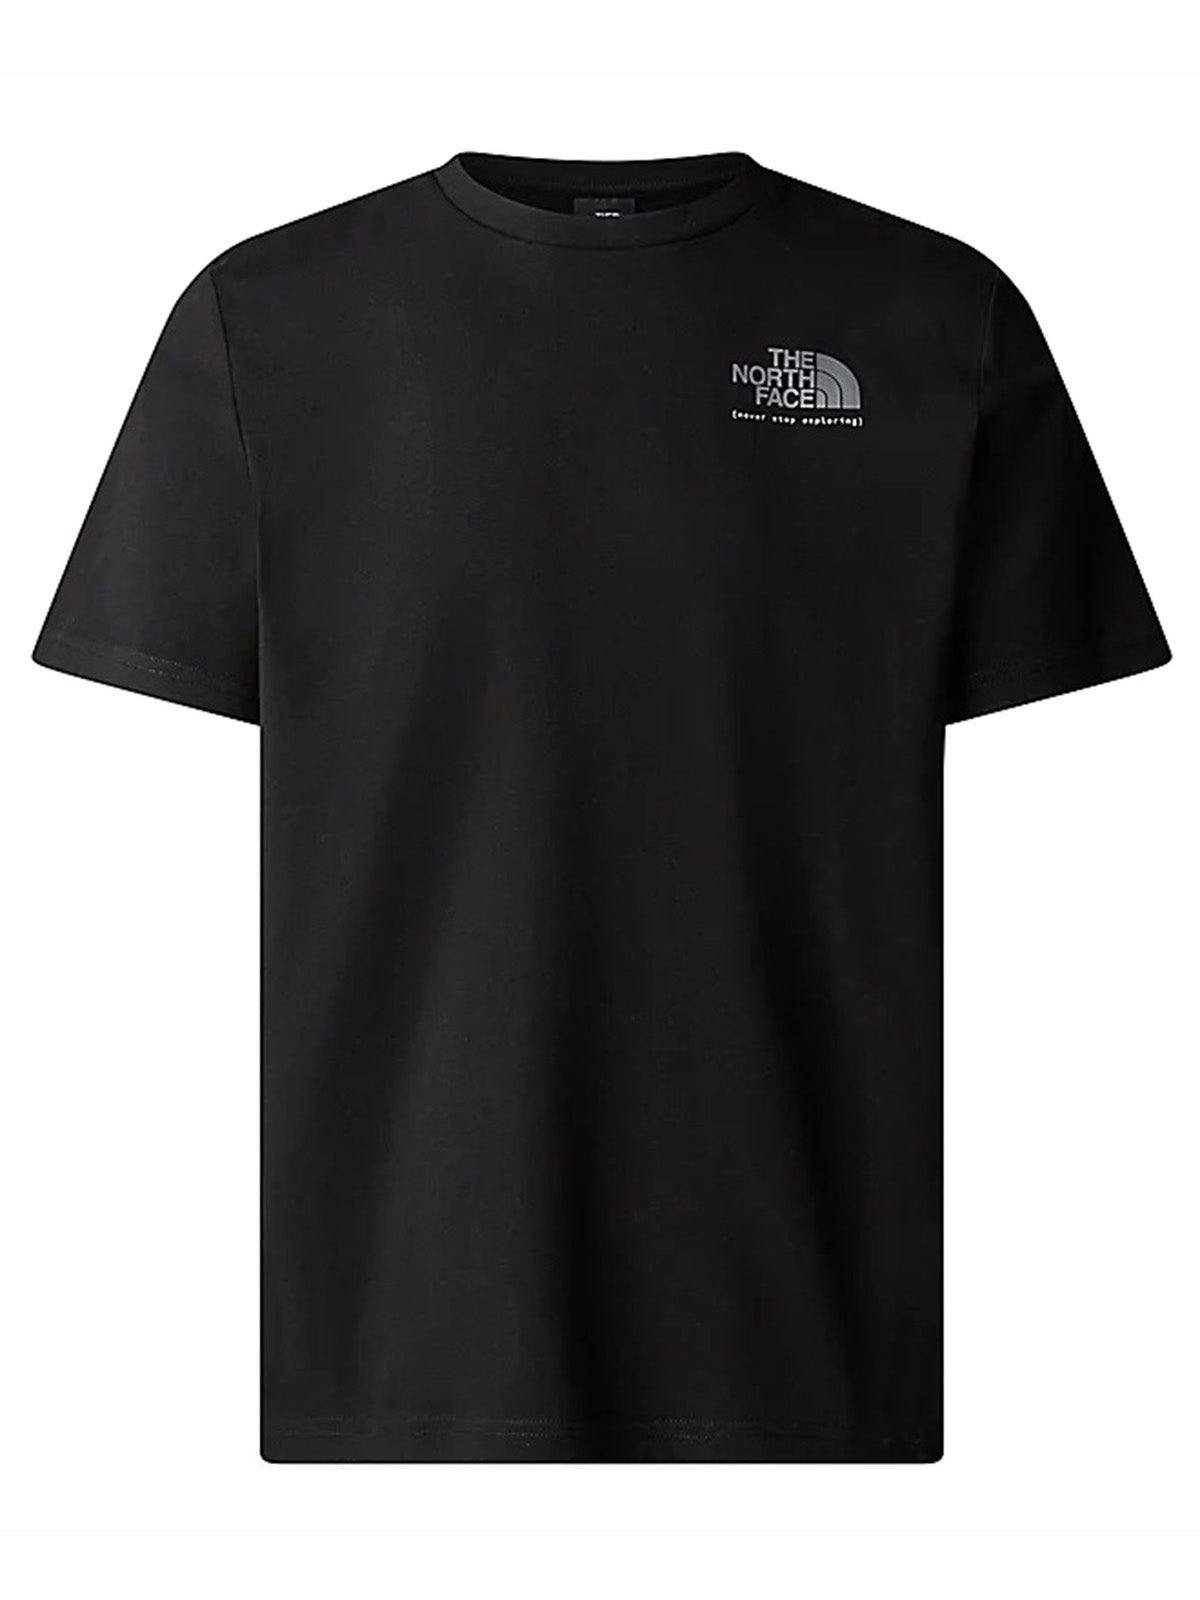 T-shirt Uomo The North Face - Graphic 3 T-Shirt - Nero